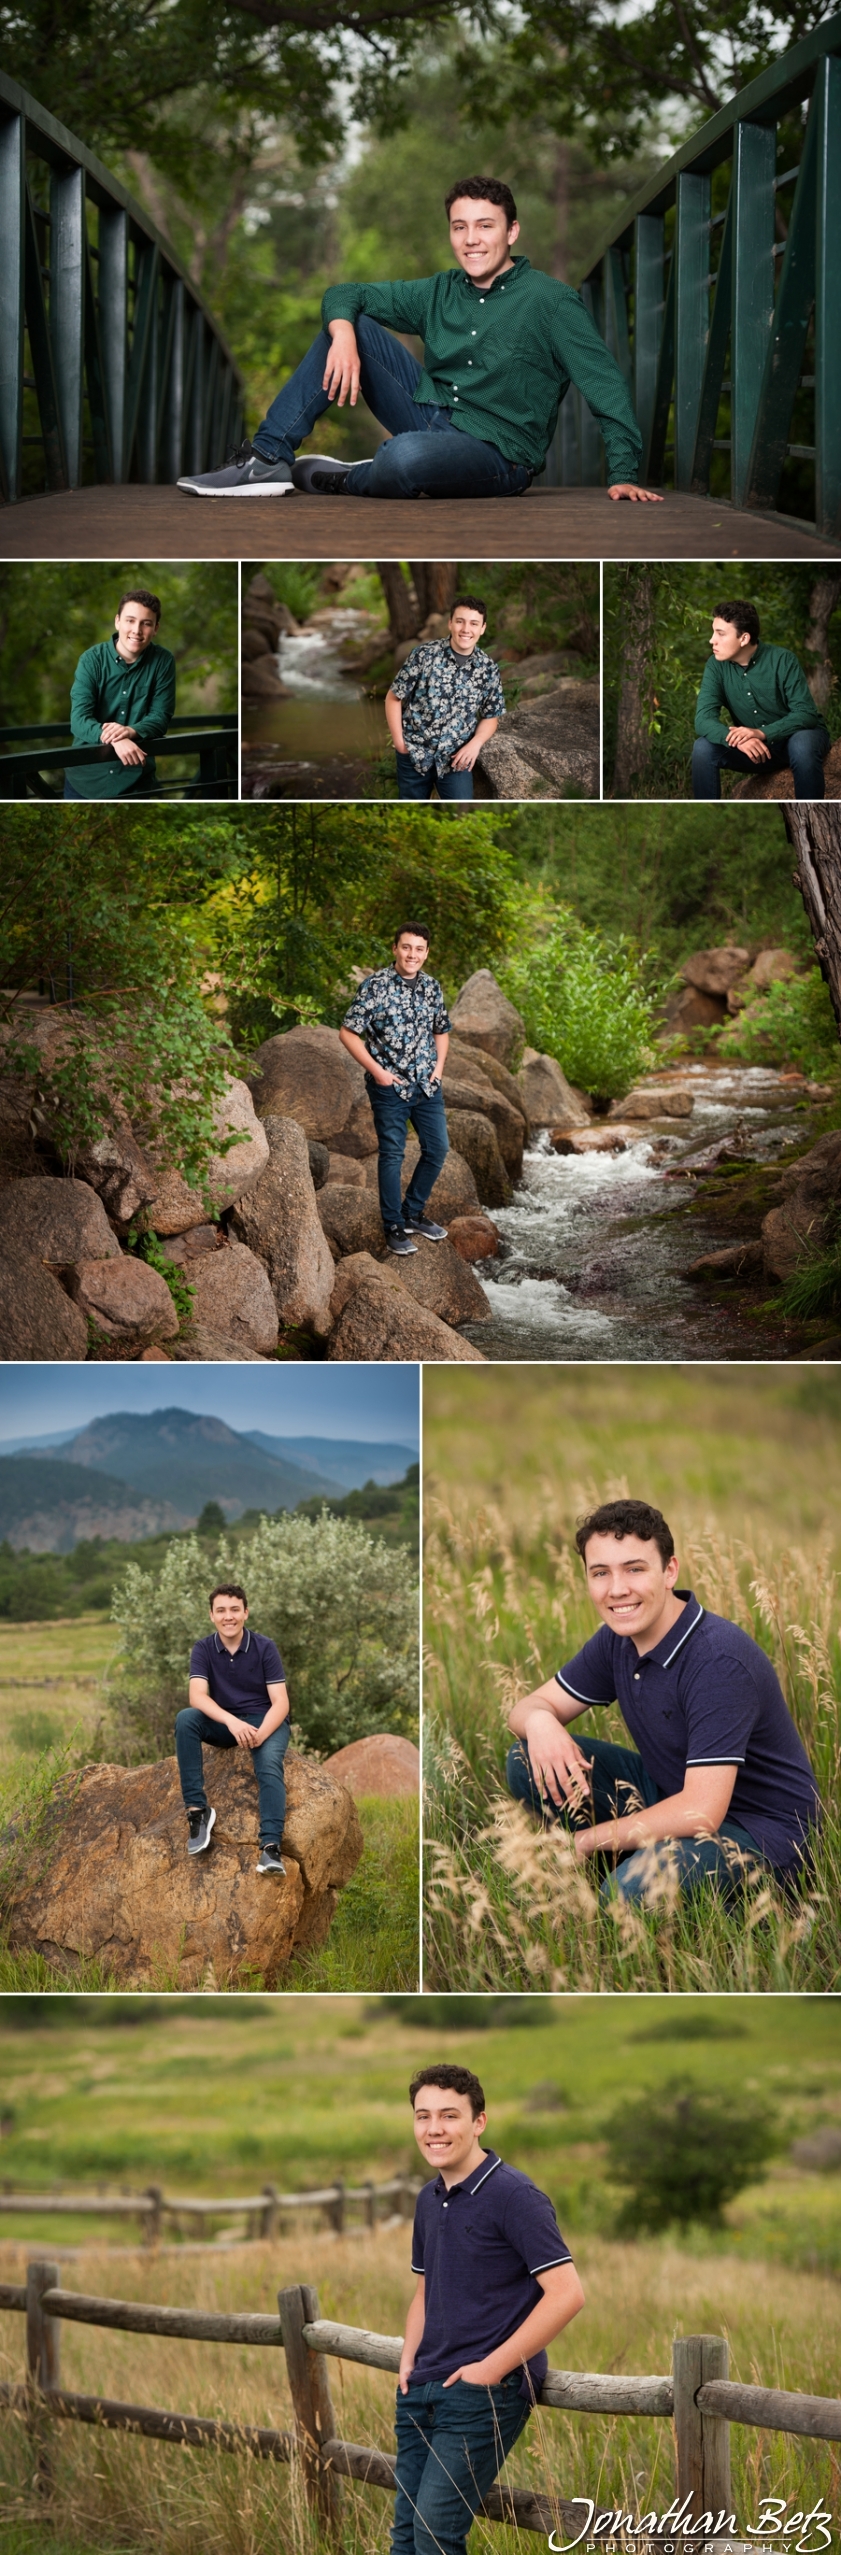 Discovery Canyon Campus High School Senior Pictures Jonathan Betz Photography Colorado Springs Photographer